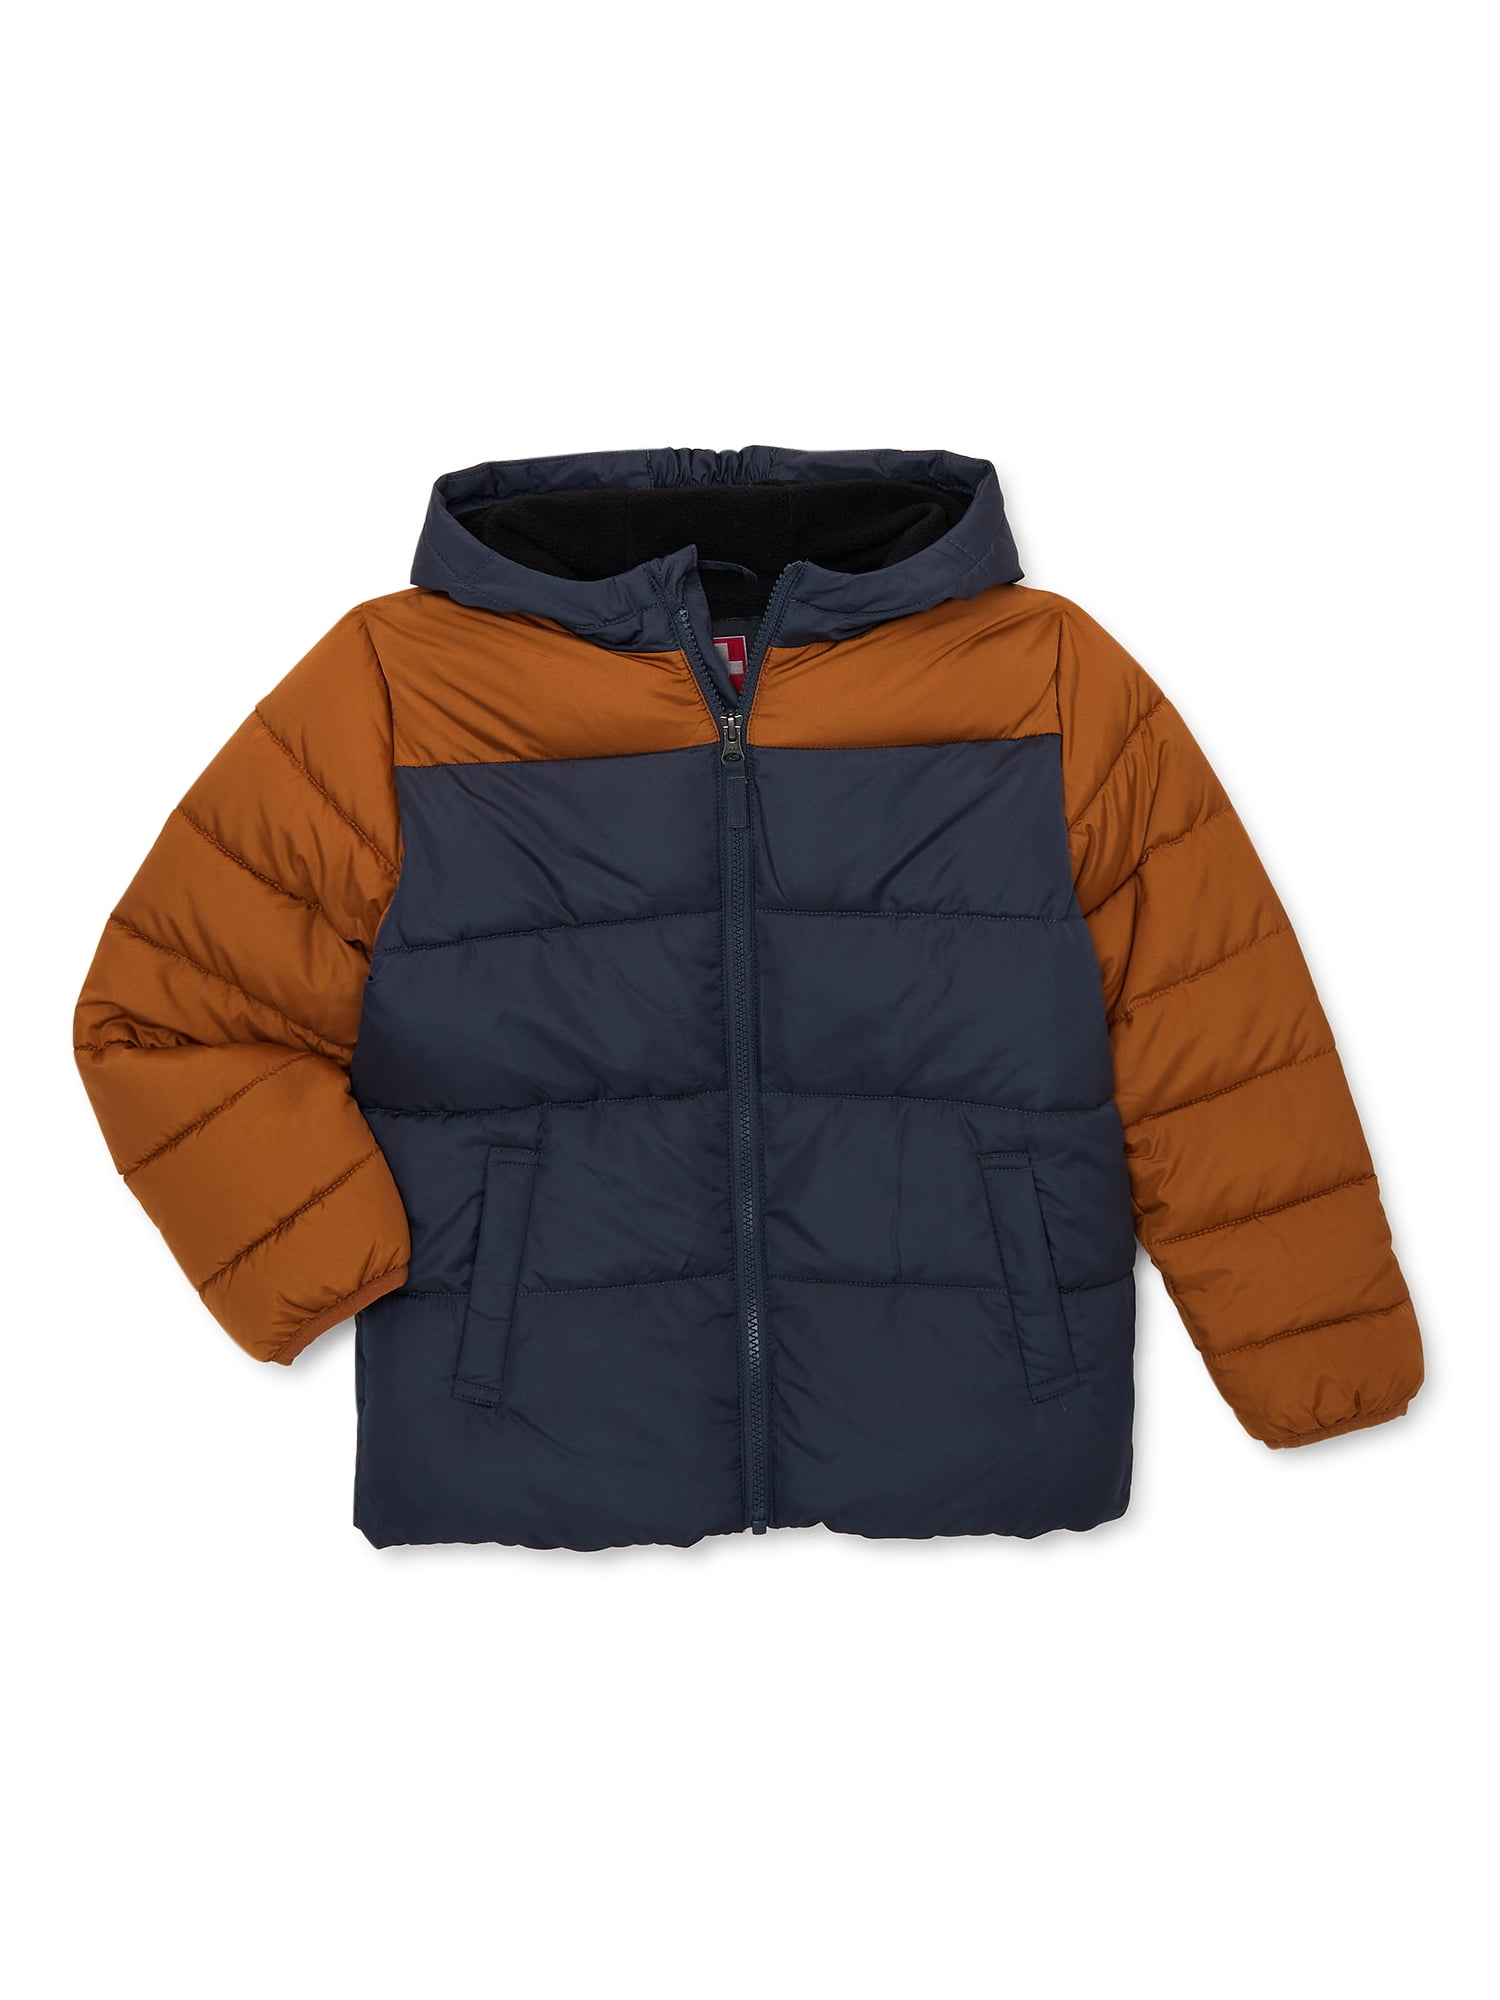 Swiss Tech Boys Winter Puffer Jacket with Hood, Sizes 4-18 & Husky ...